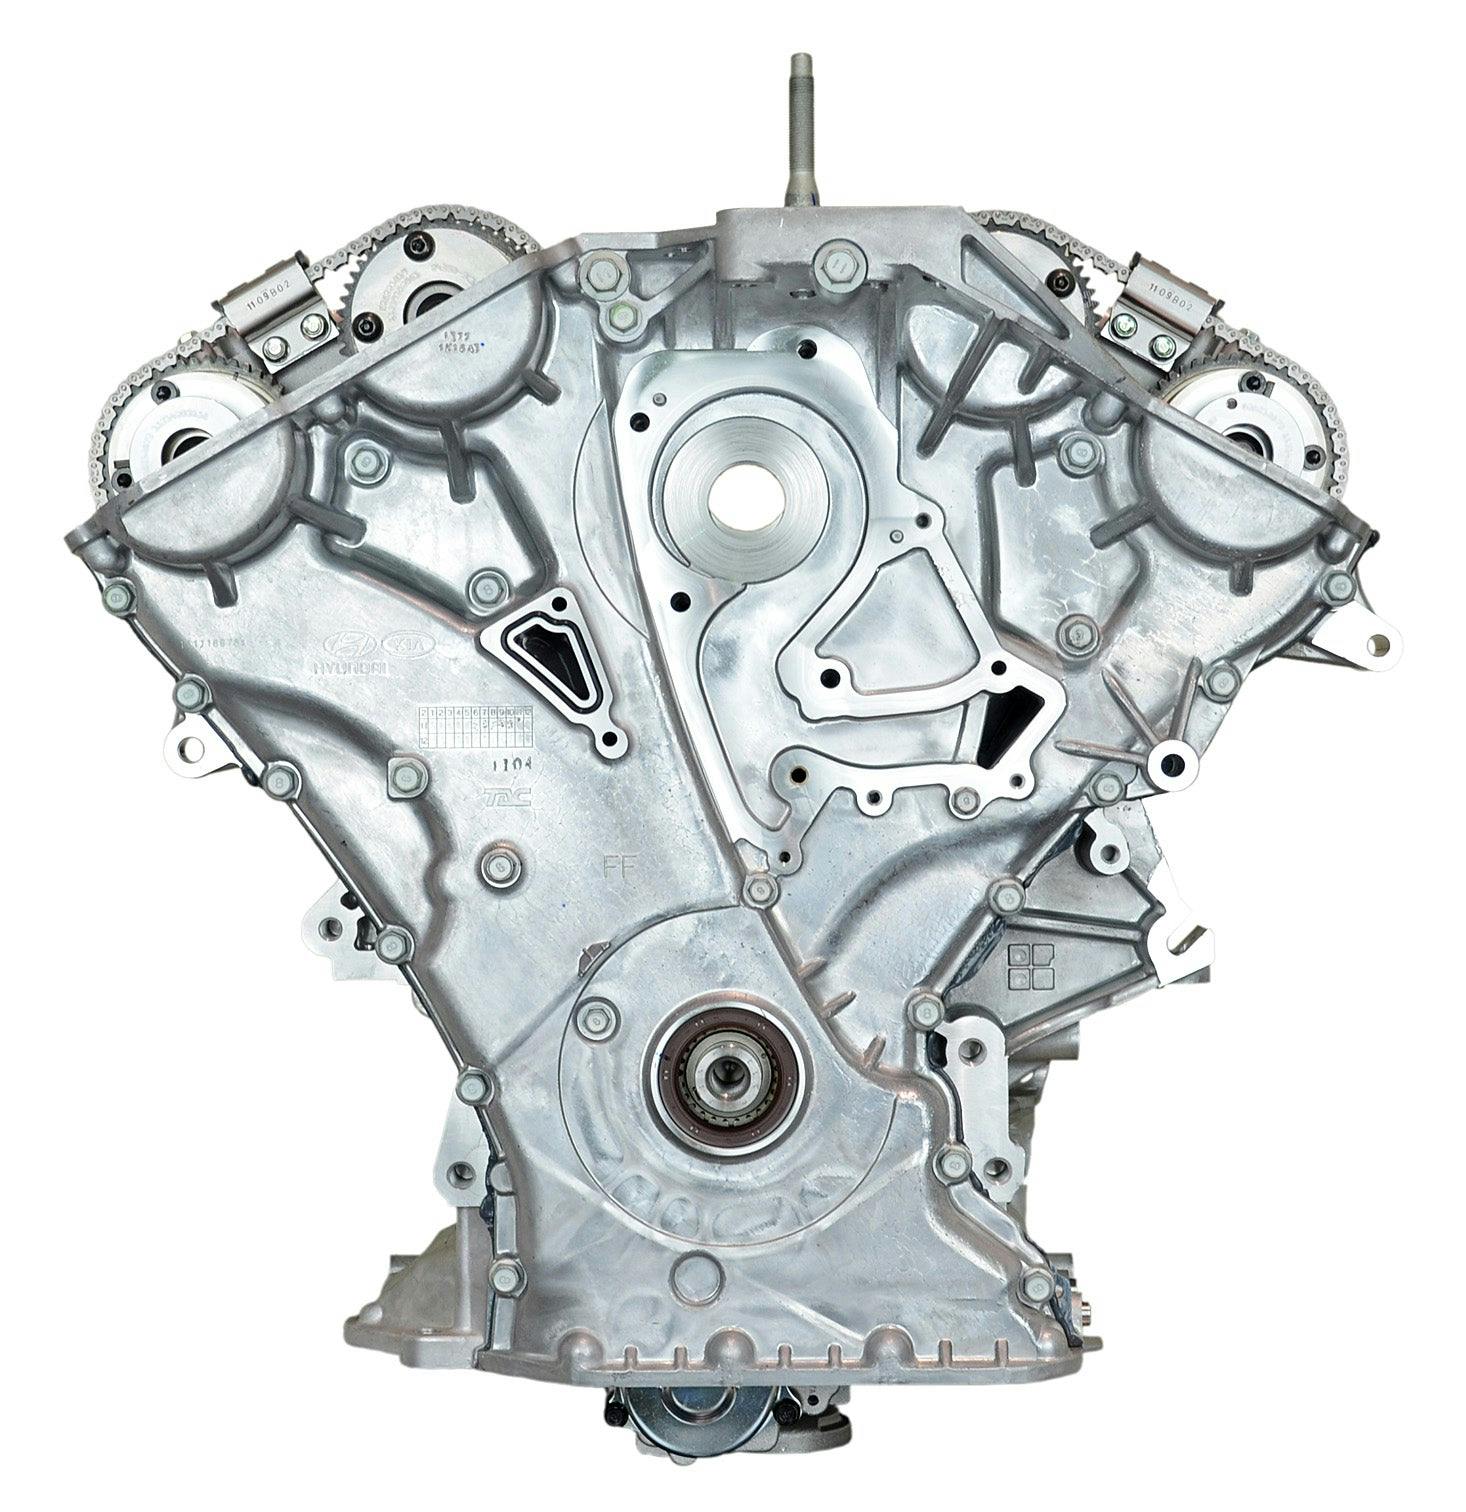 3.5L V6 Engine for 2010-2011 Hyundai Santa Fe/Kia Sedona, Sorento